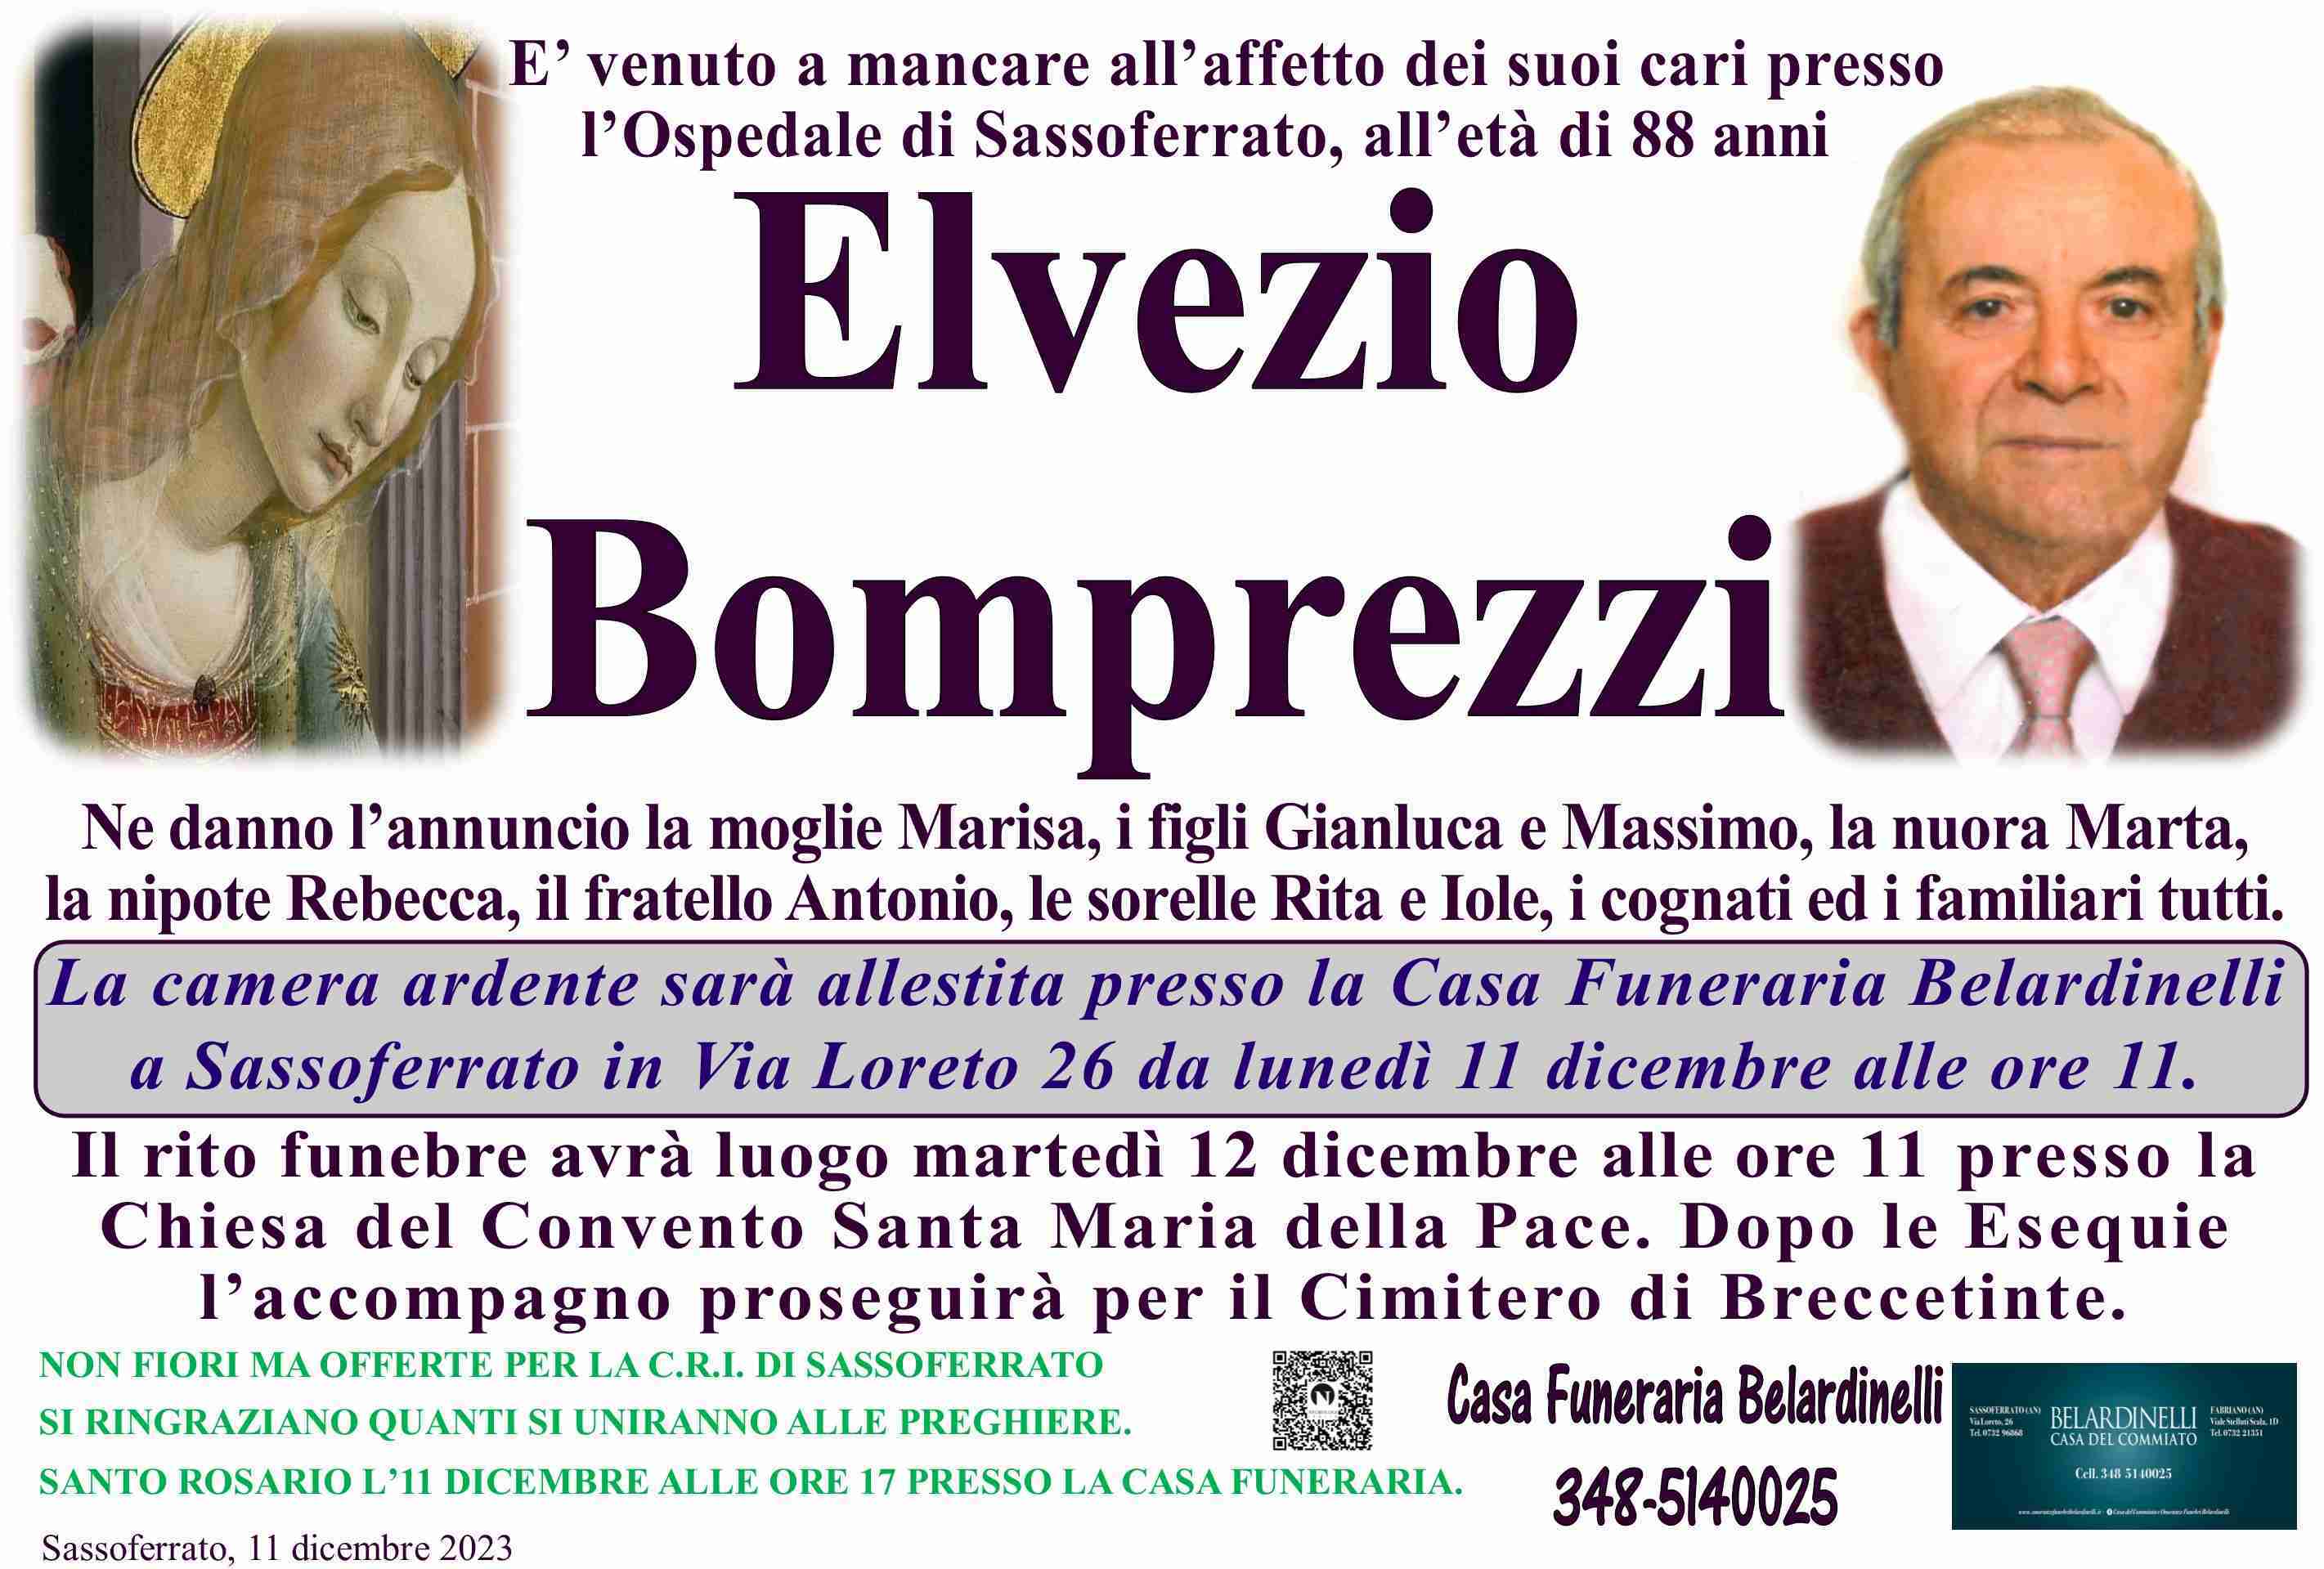 Elvezio Bomprezzi